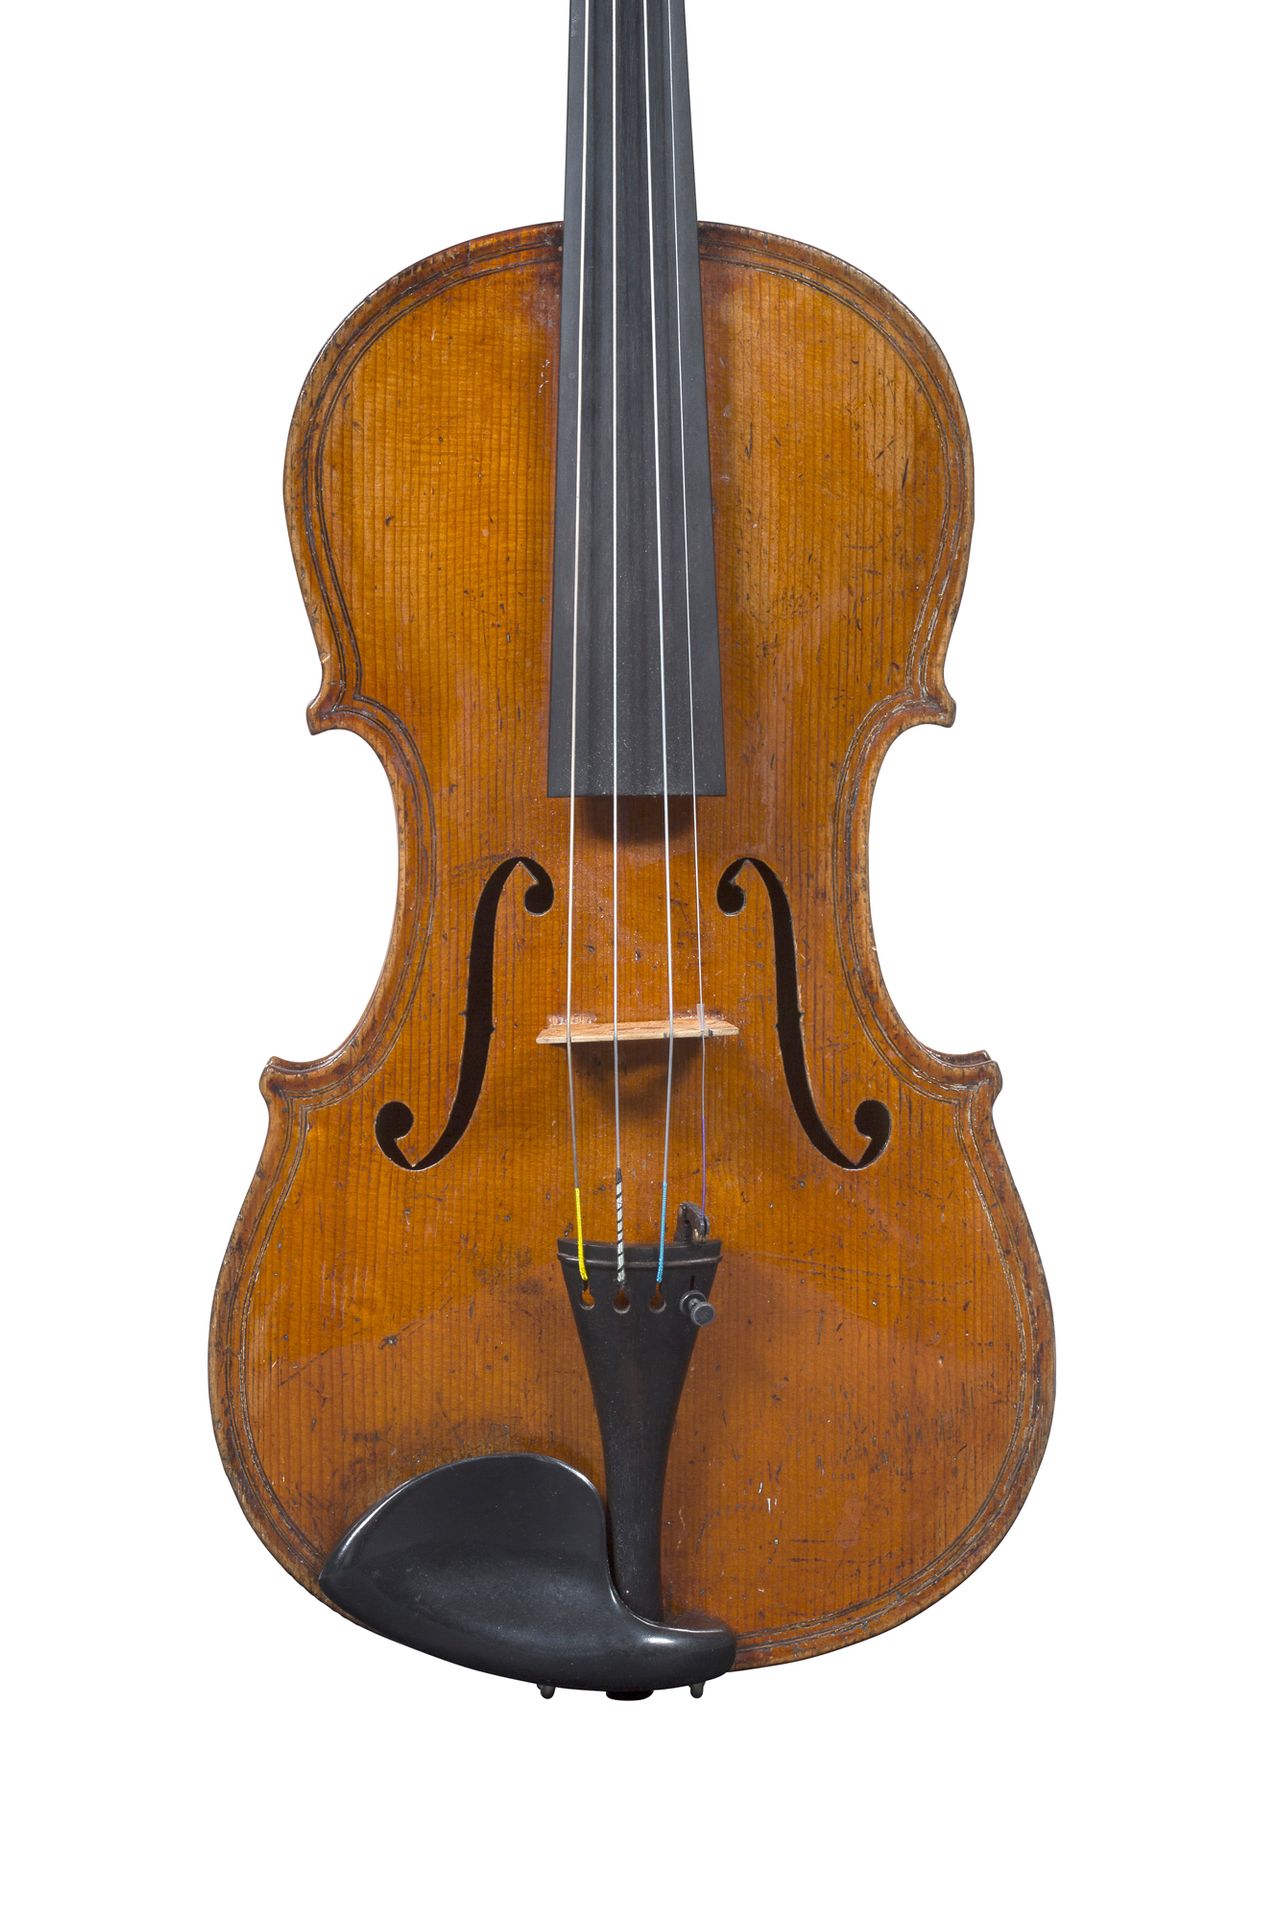 Null 19世纪小提琴
双层镶边
带有 "Giovan Paolo Maggin à Brescia 1630 "的天书标签。
Maggin à Bresci&hellip;